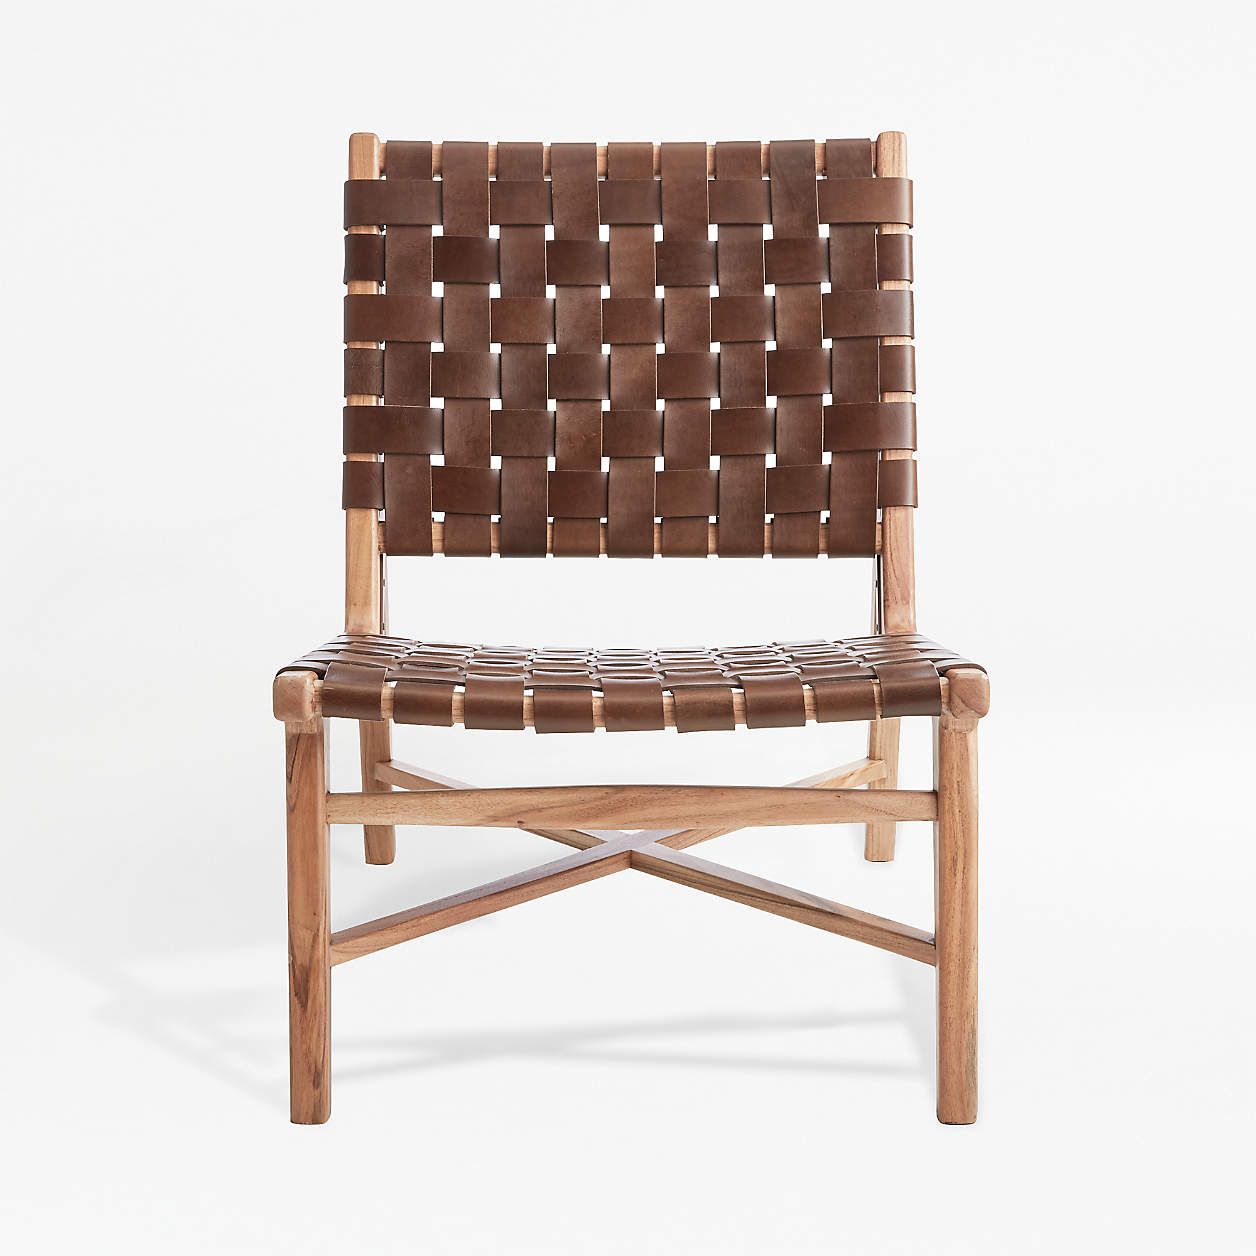 Taj White Woven Leather Strap Chair + Reviews | Crate & Barrel | Crate & Barrel